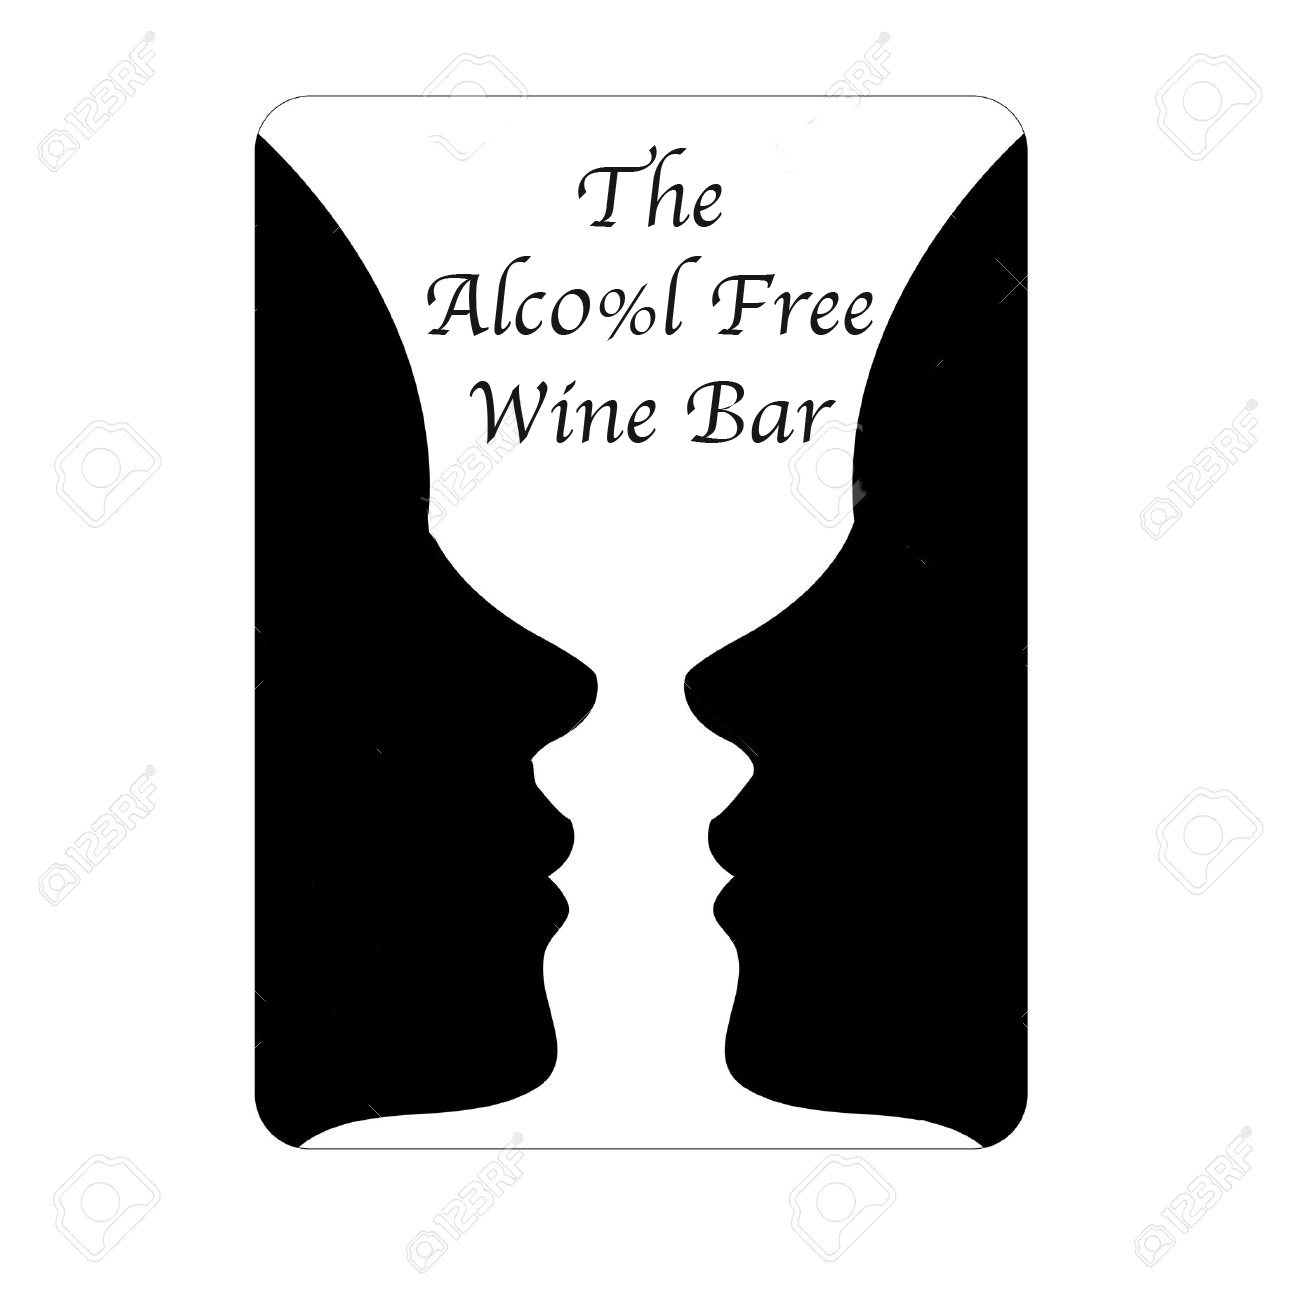 The Alcohol Free Wine Bar